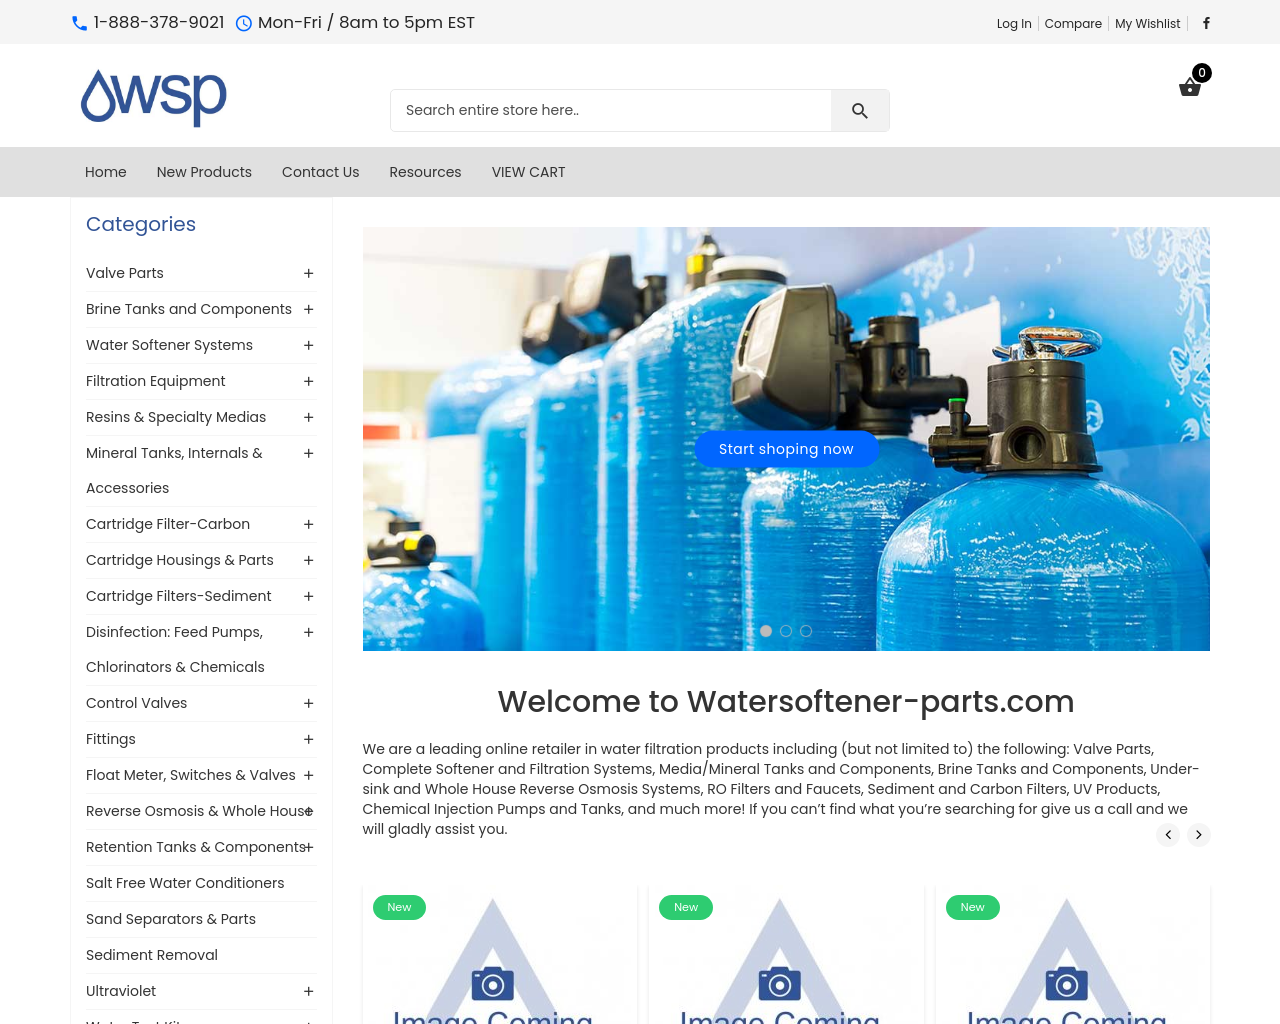 watersoftener-parts.com